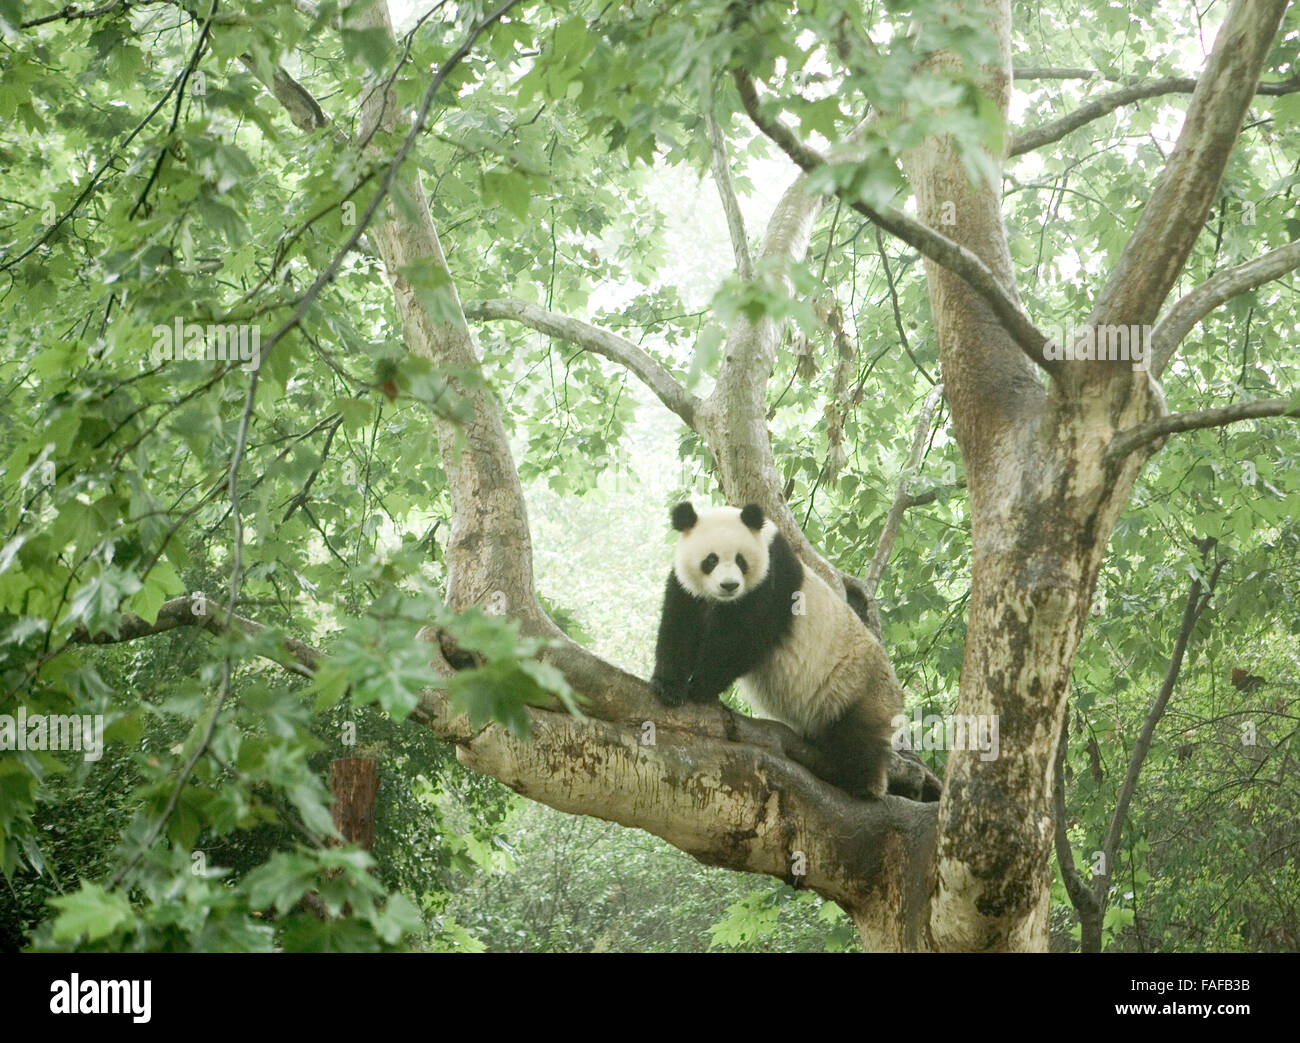 A Giant Panda enjoying climbing a tree at the National Panda Reserve at Chengdu, ( The capital of Sichuan )China Stock Photo